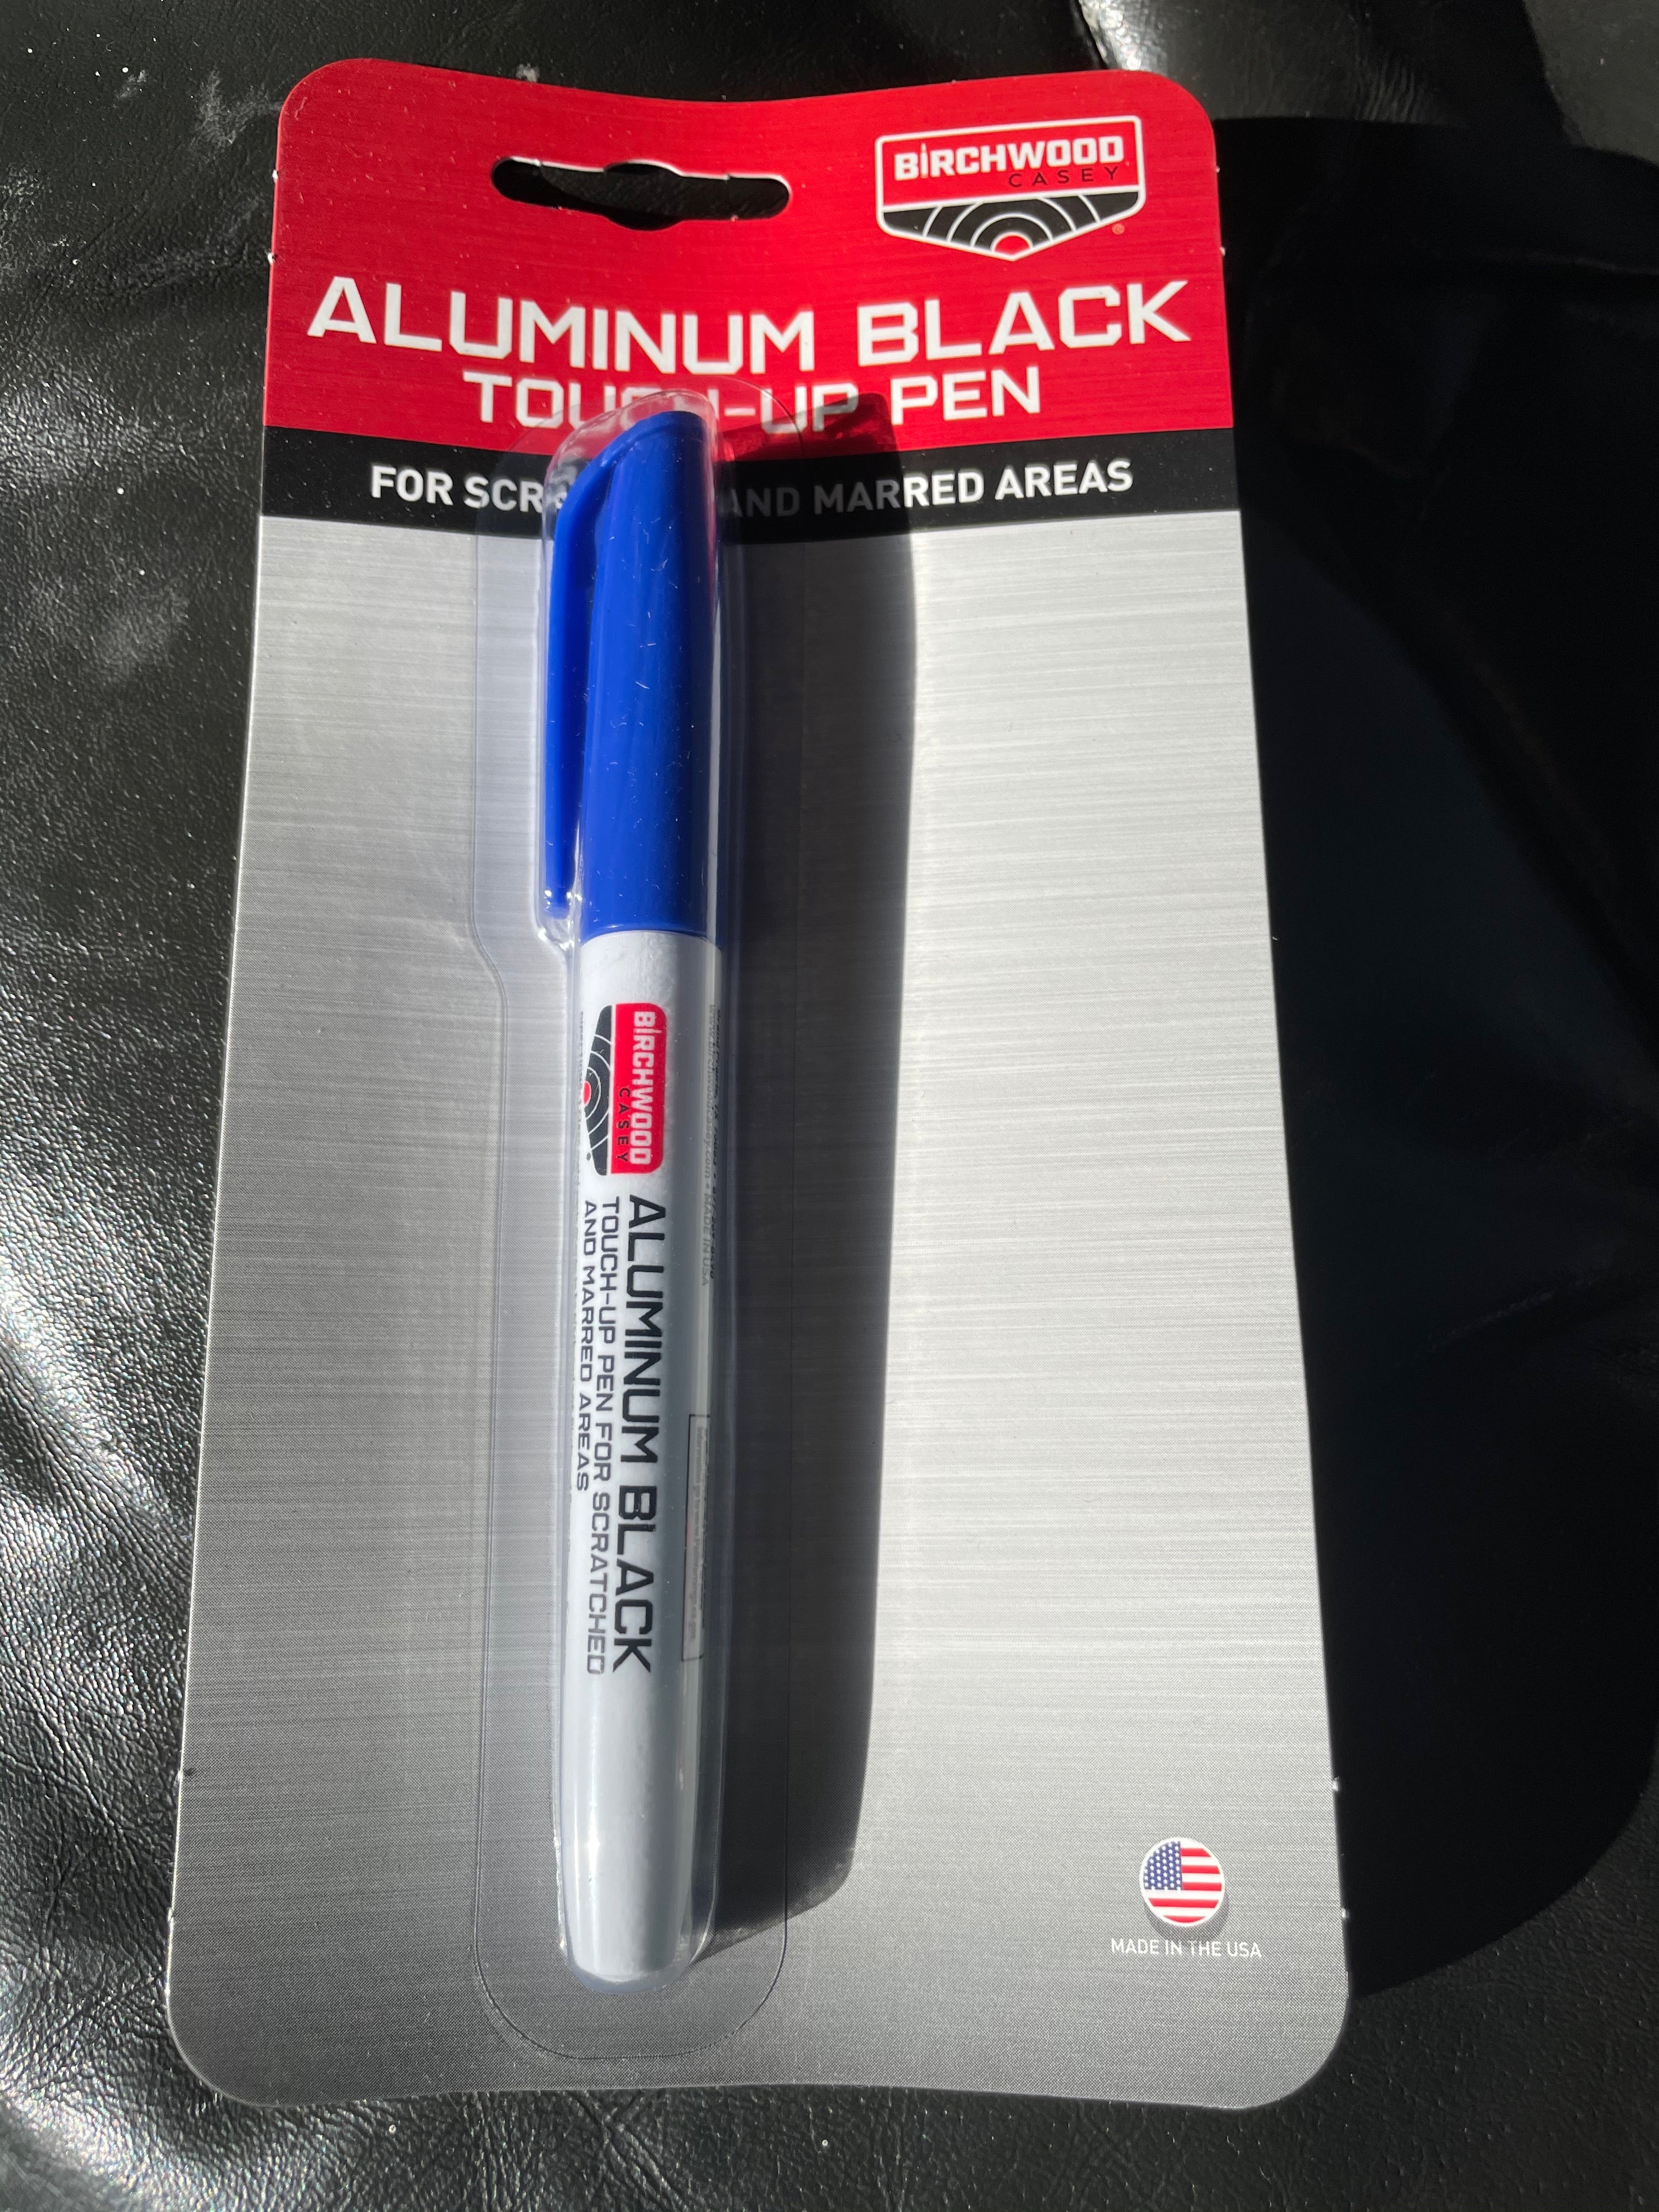  Aluminum Black Touch-Up 3 Oz - New : Everything Else